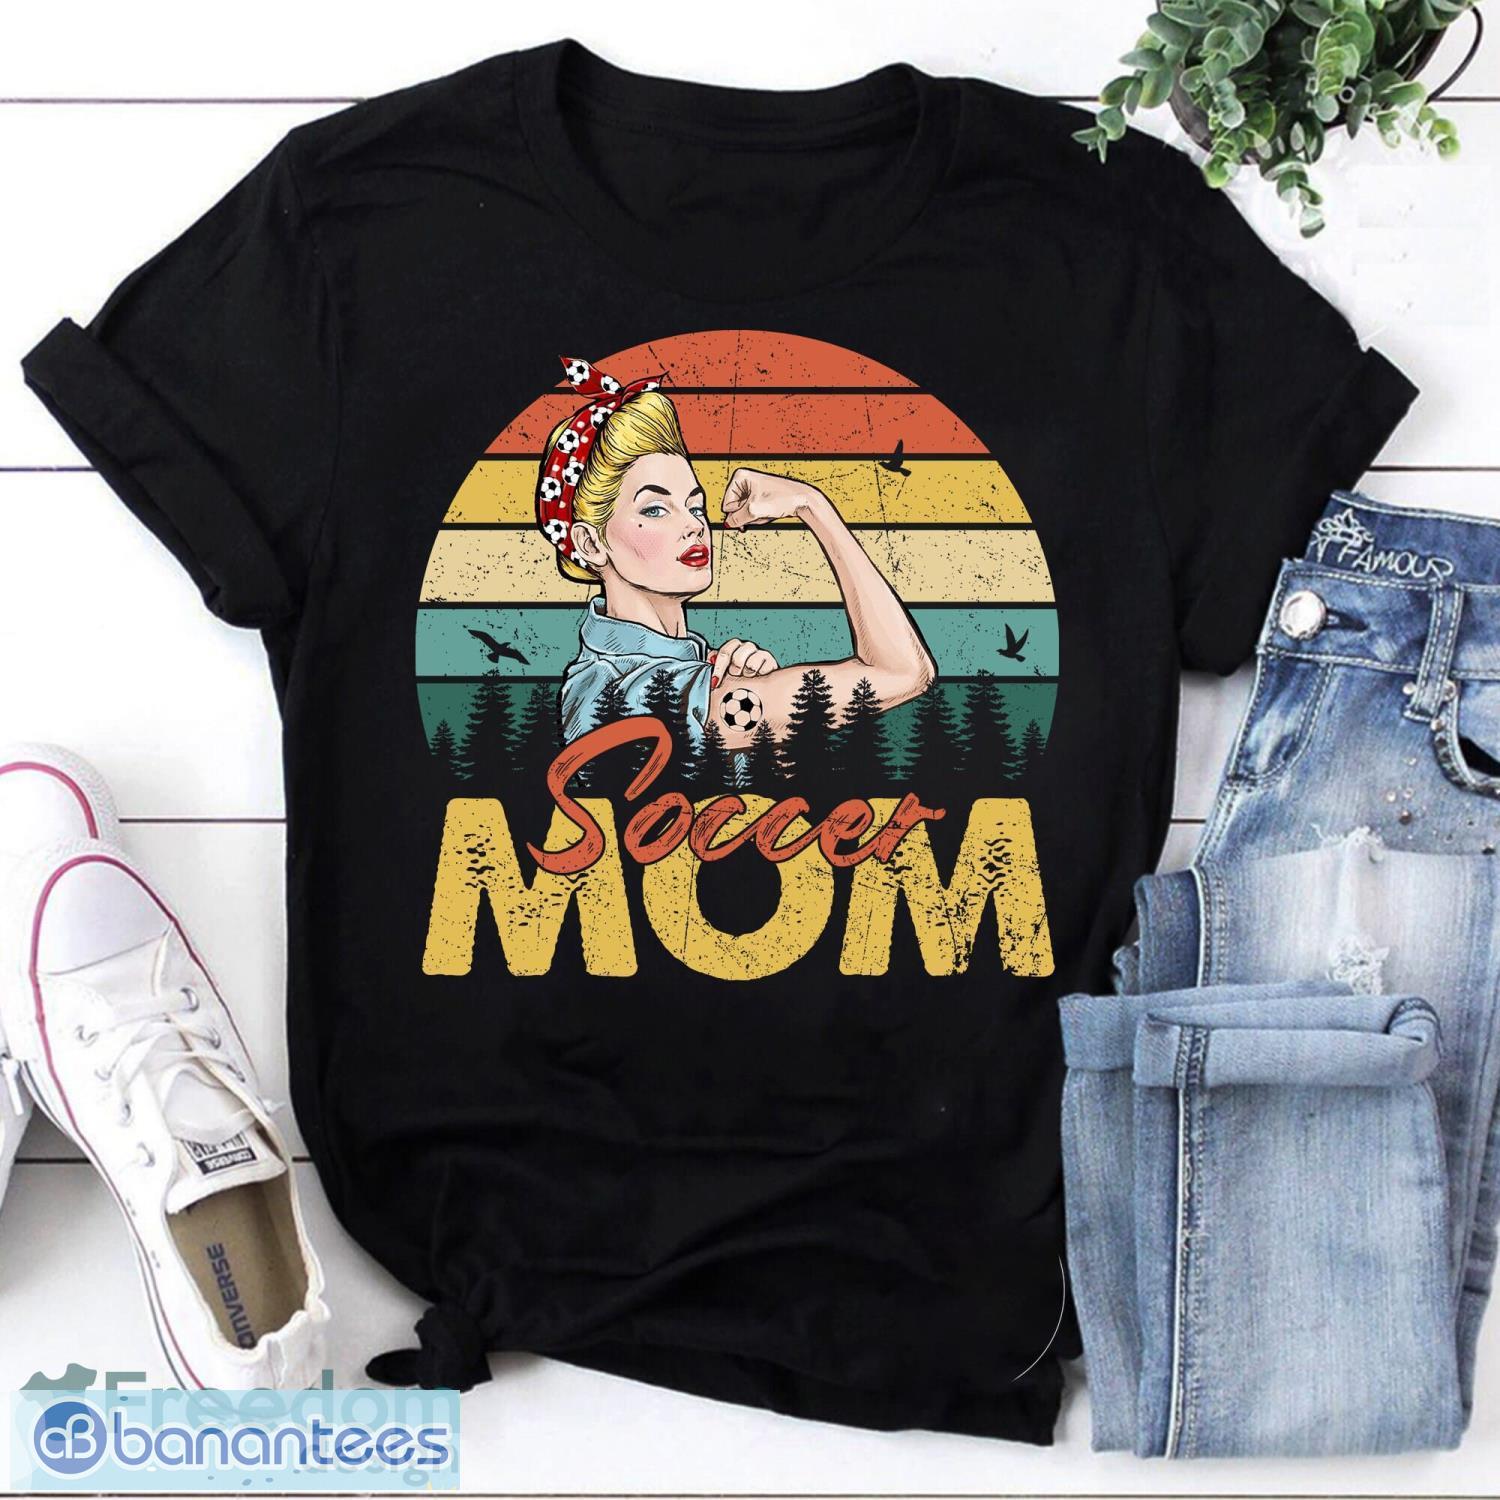 Soccer Mom Funny Soccer Ball Womens Retro Vintage T-Shirt Funny Soccer Mom Shirt For Mother's Day Shirt Product Photo 1